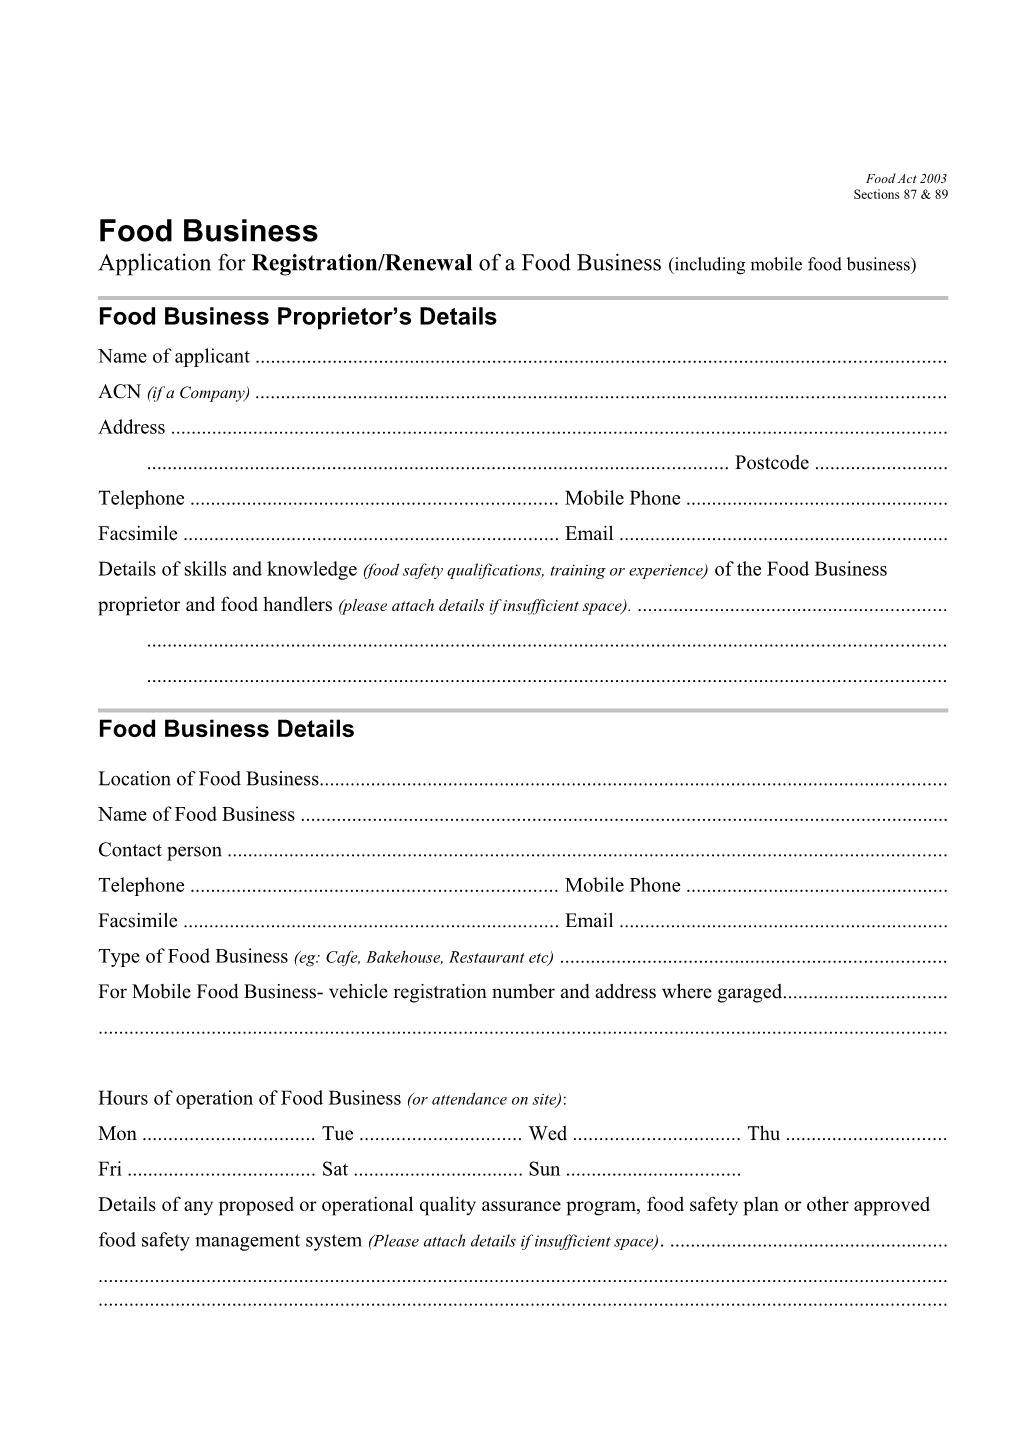 Application for Registration/Renewal of a Food Business (Including Mobile Food Business)